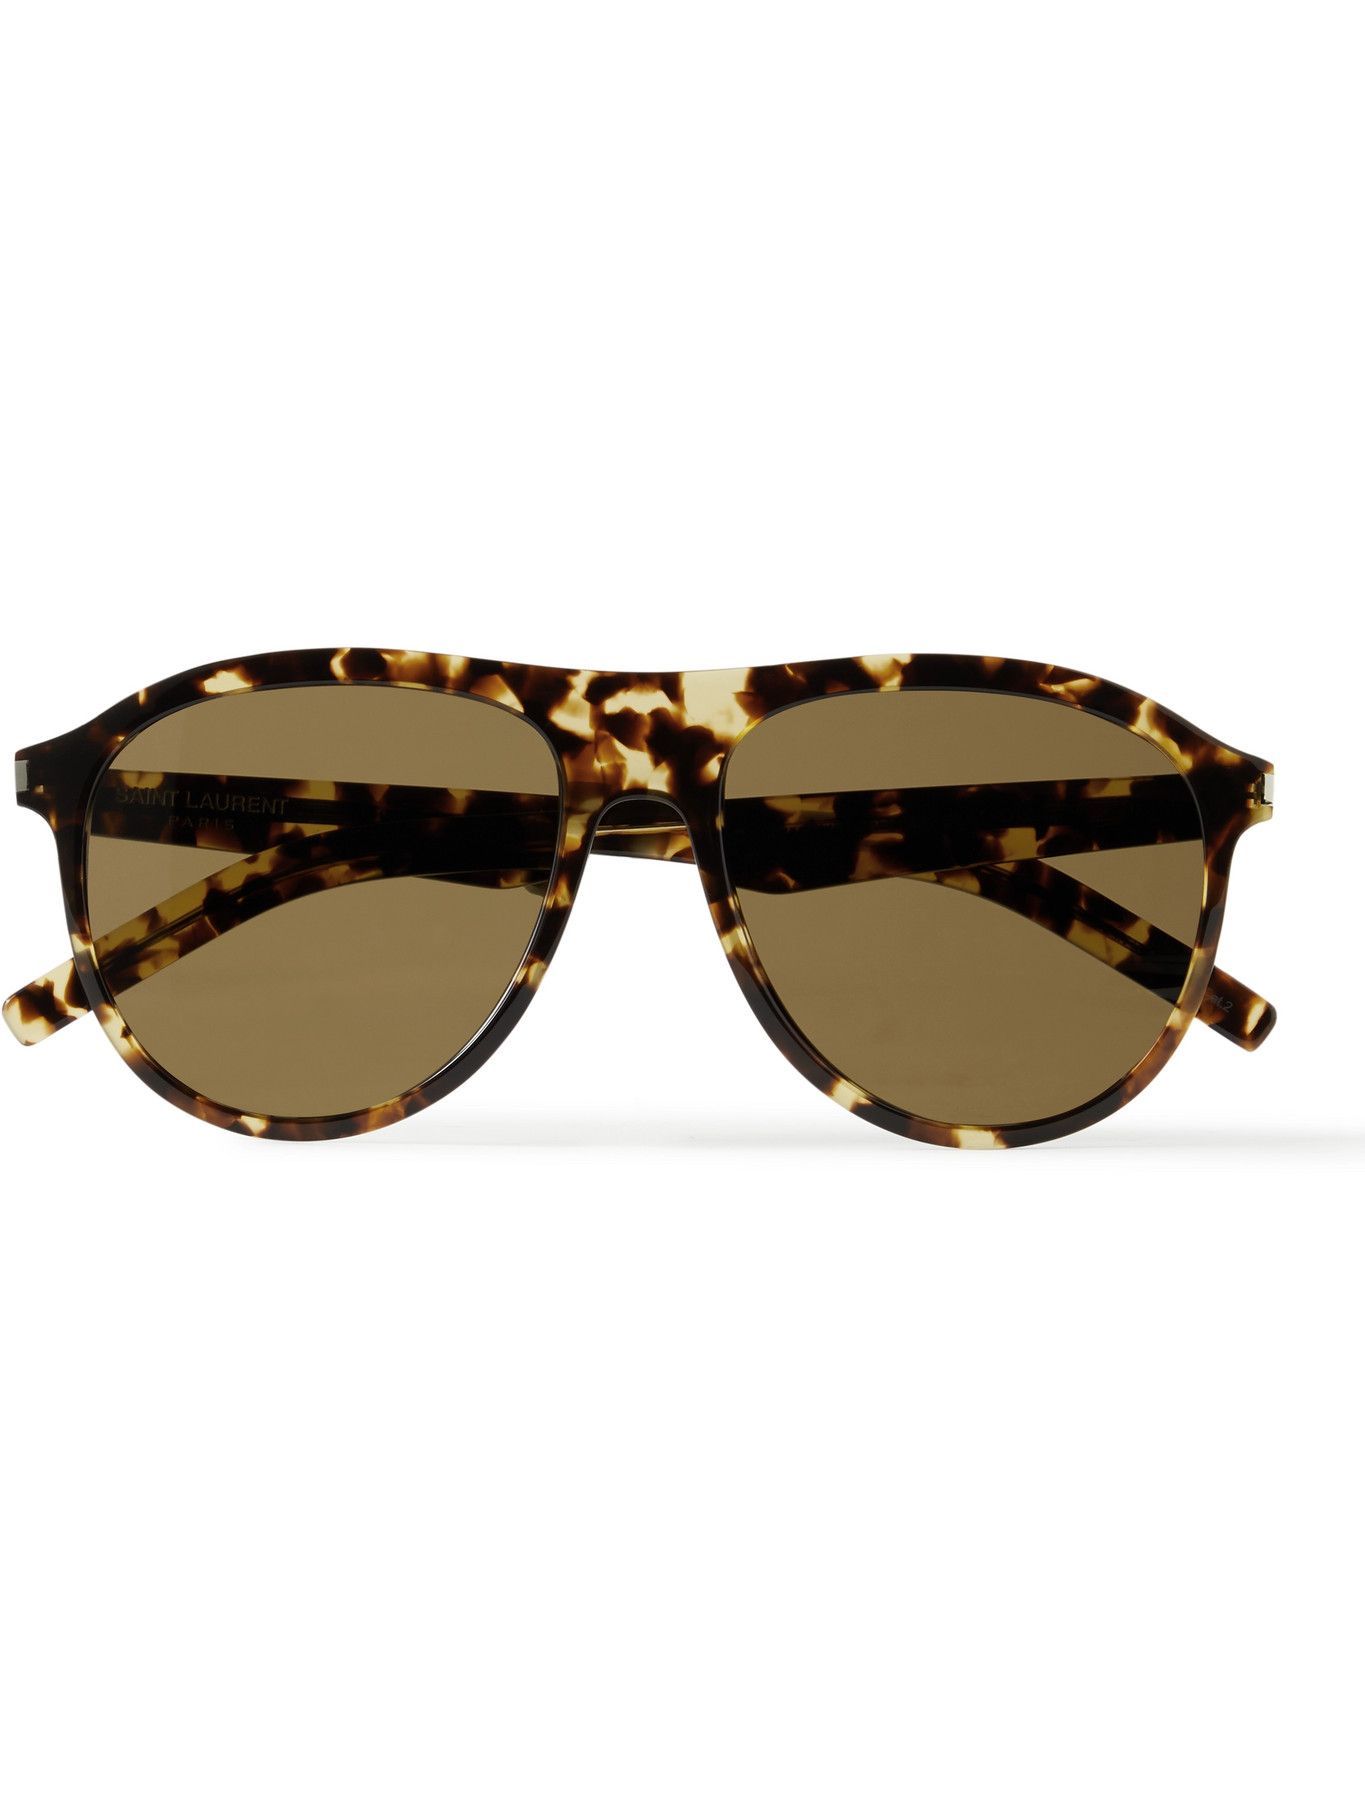 Saint Laurent Tortoiseshell acetate sunglasses - protekseg.com.br